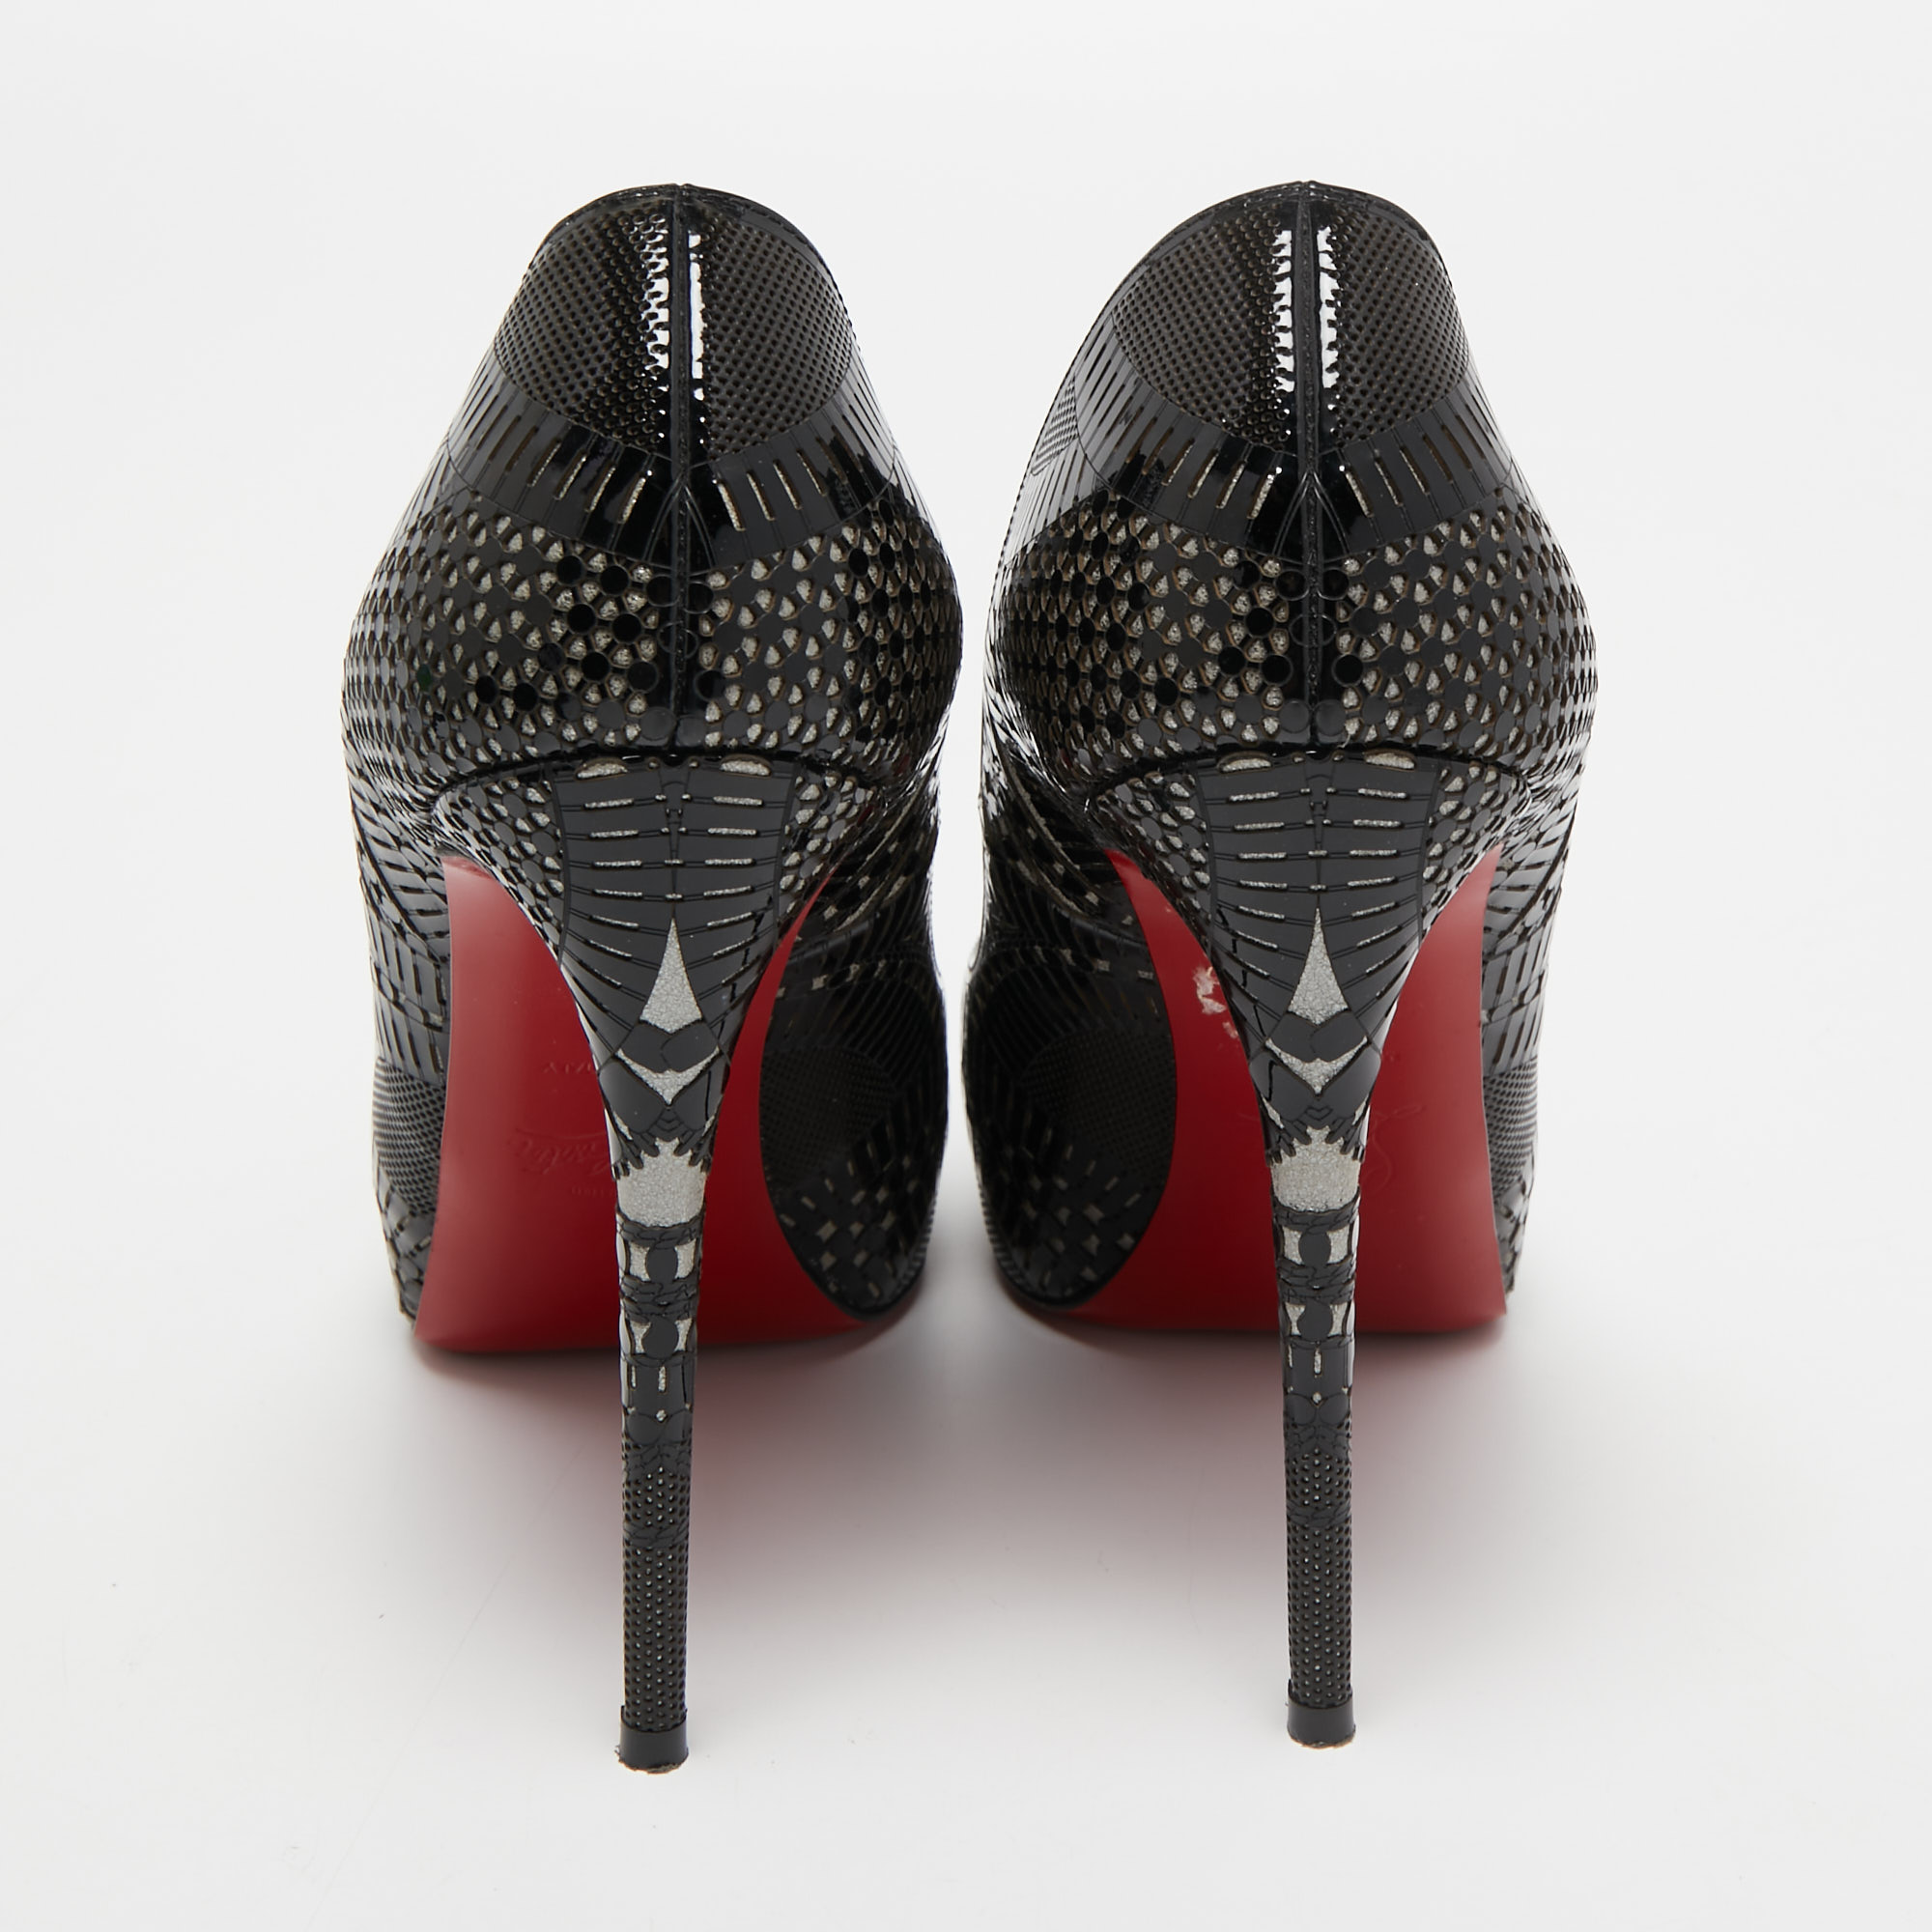 Christian Louboutin Black Patent Leather Suellena Peep Toe Pumps Size 38.5